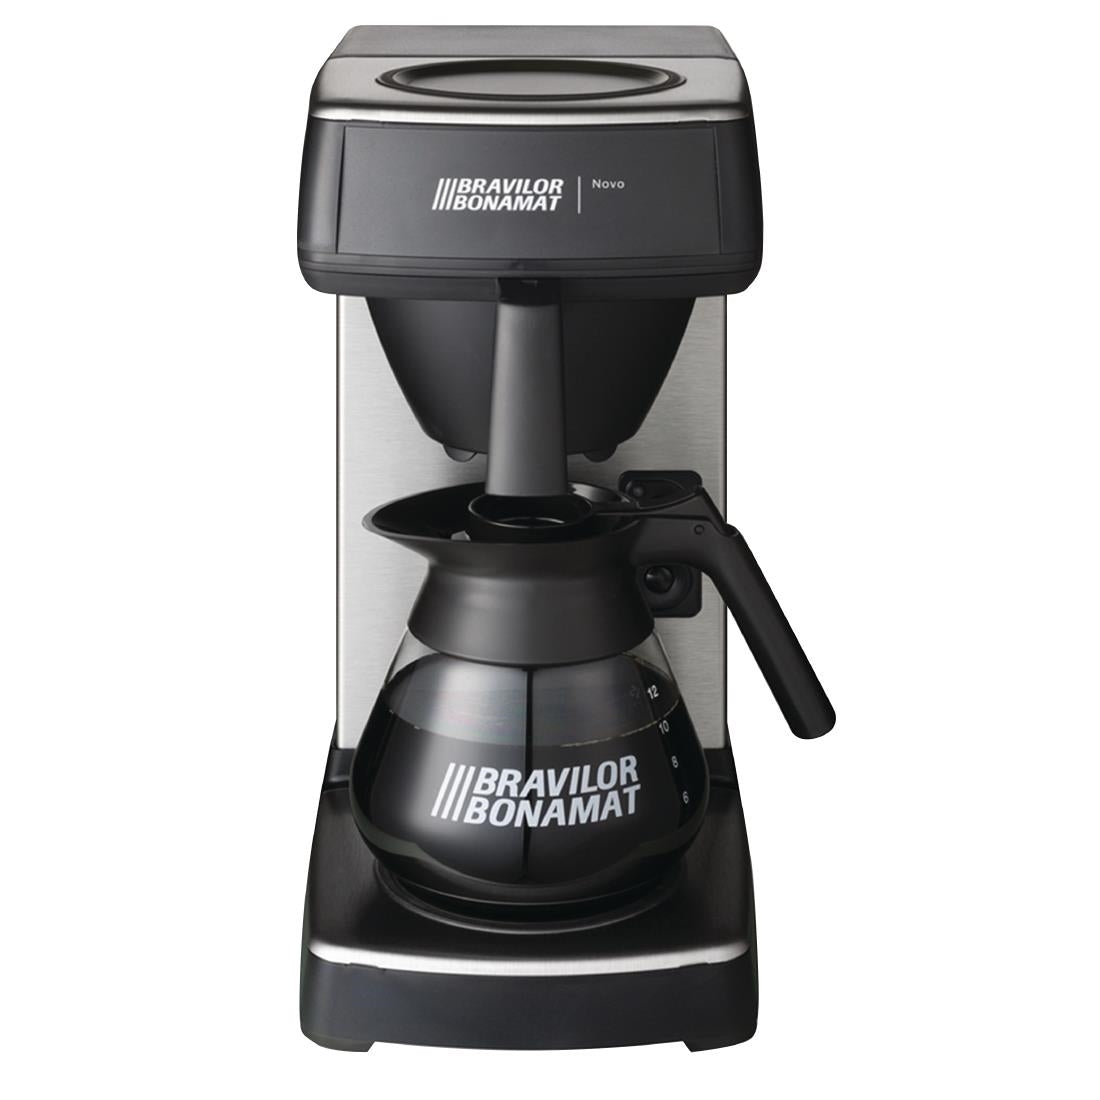 Bravilor Manual Fill Filter Coffee Machine Novo JD Catering Equipment Solutions Ltd